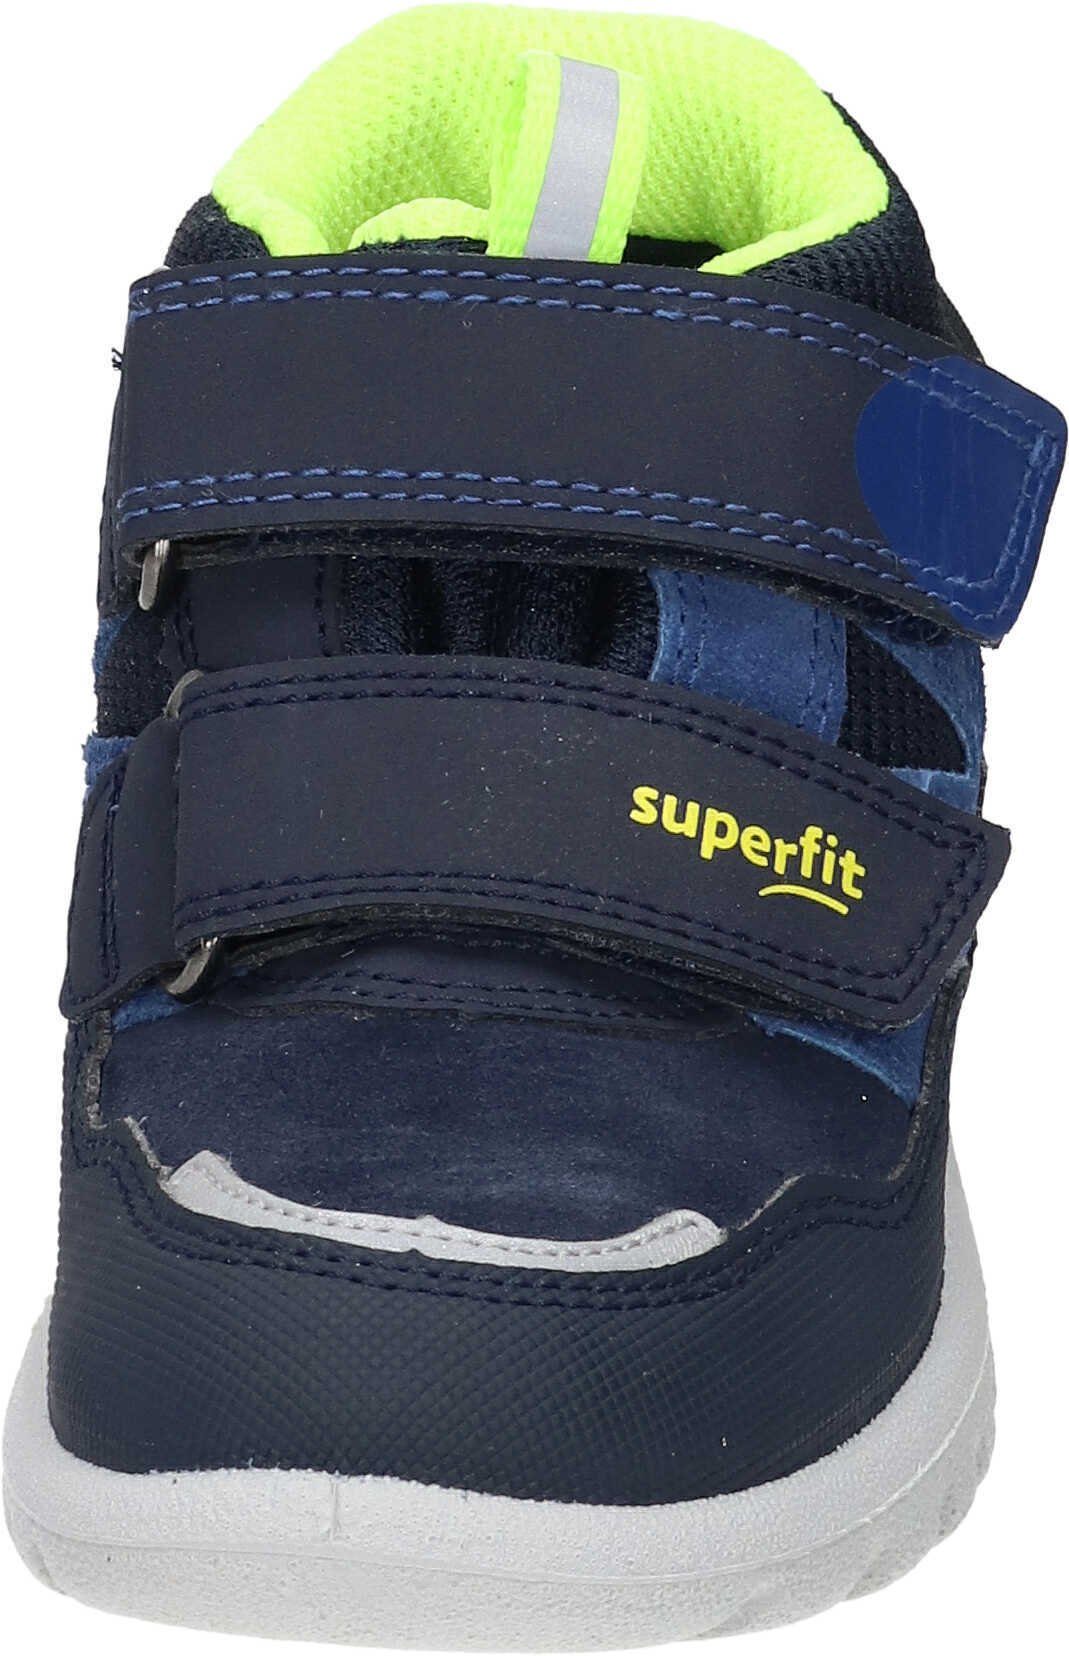 Superfit blau strapazierfähigem Synthetik Stiefel aus Stiefel